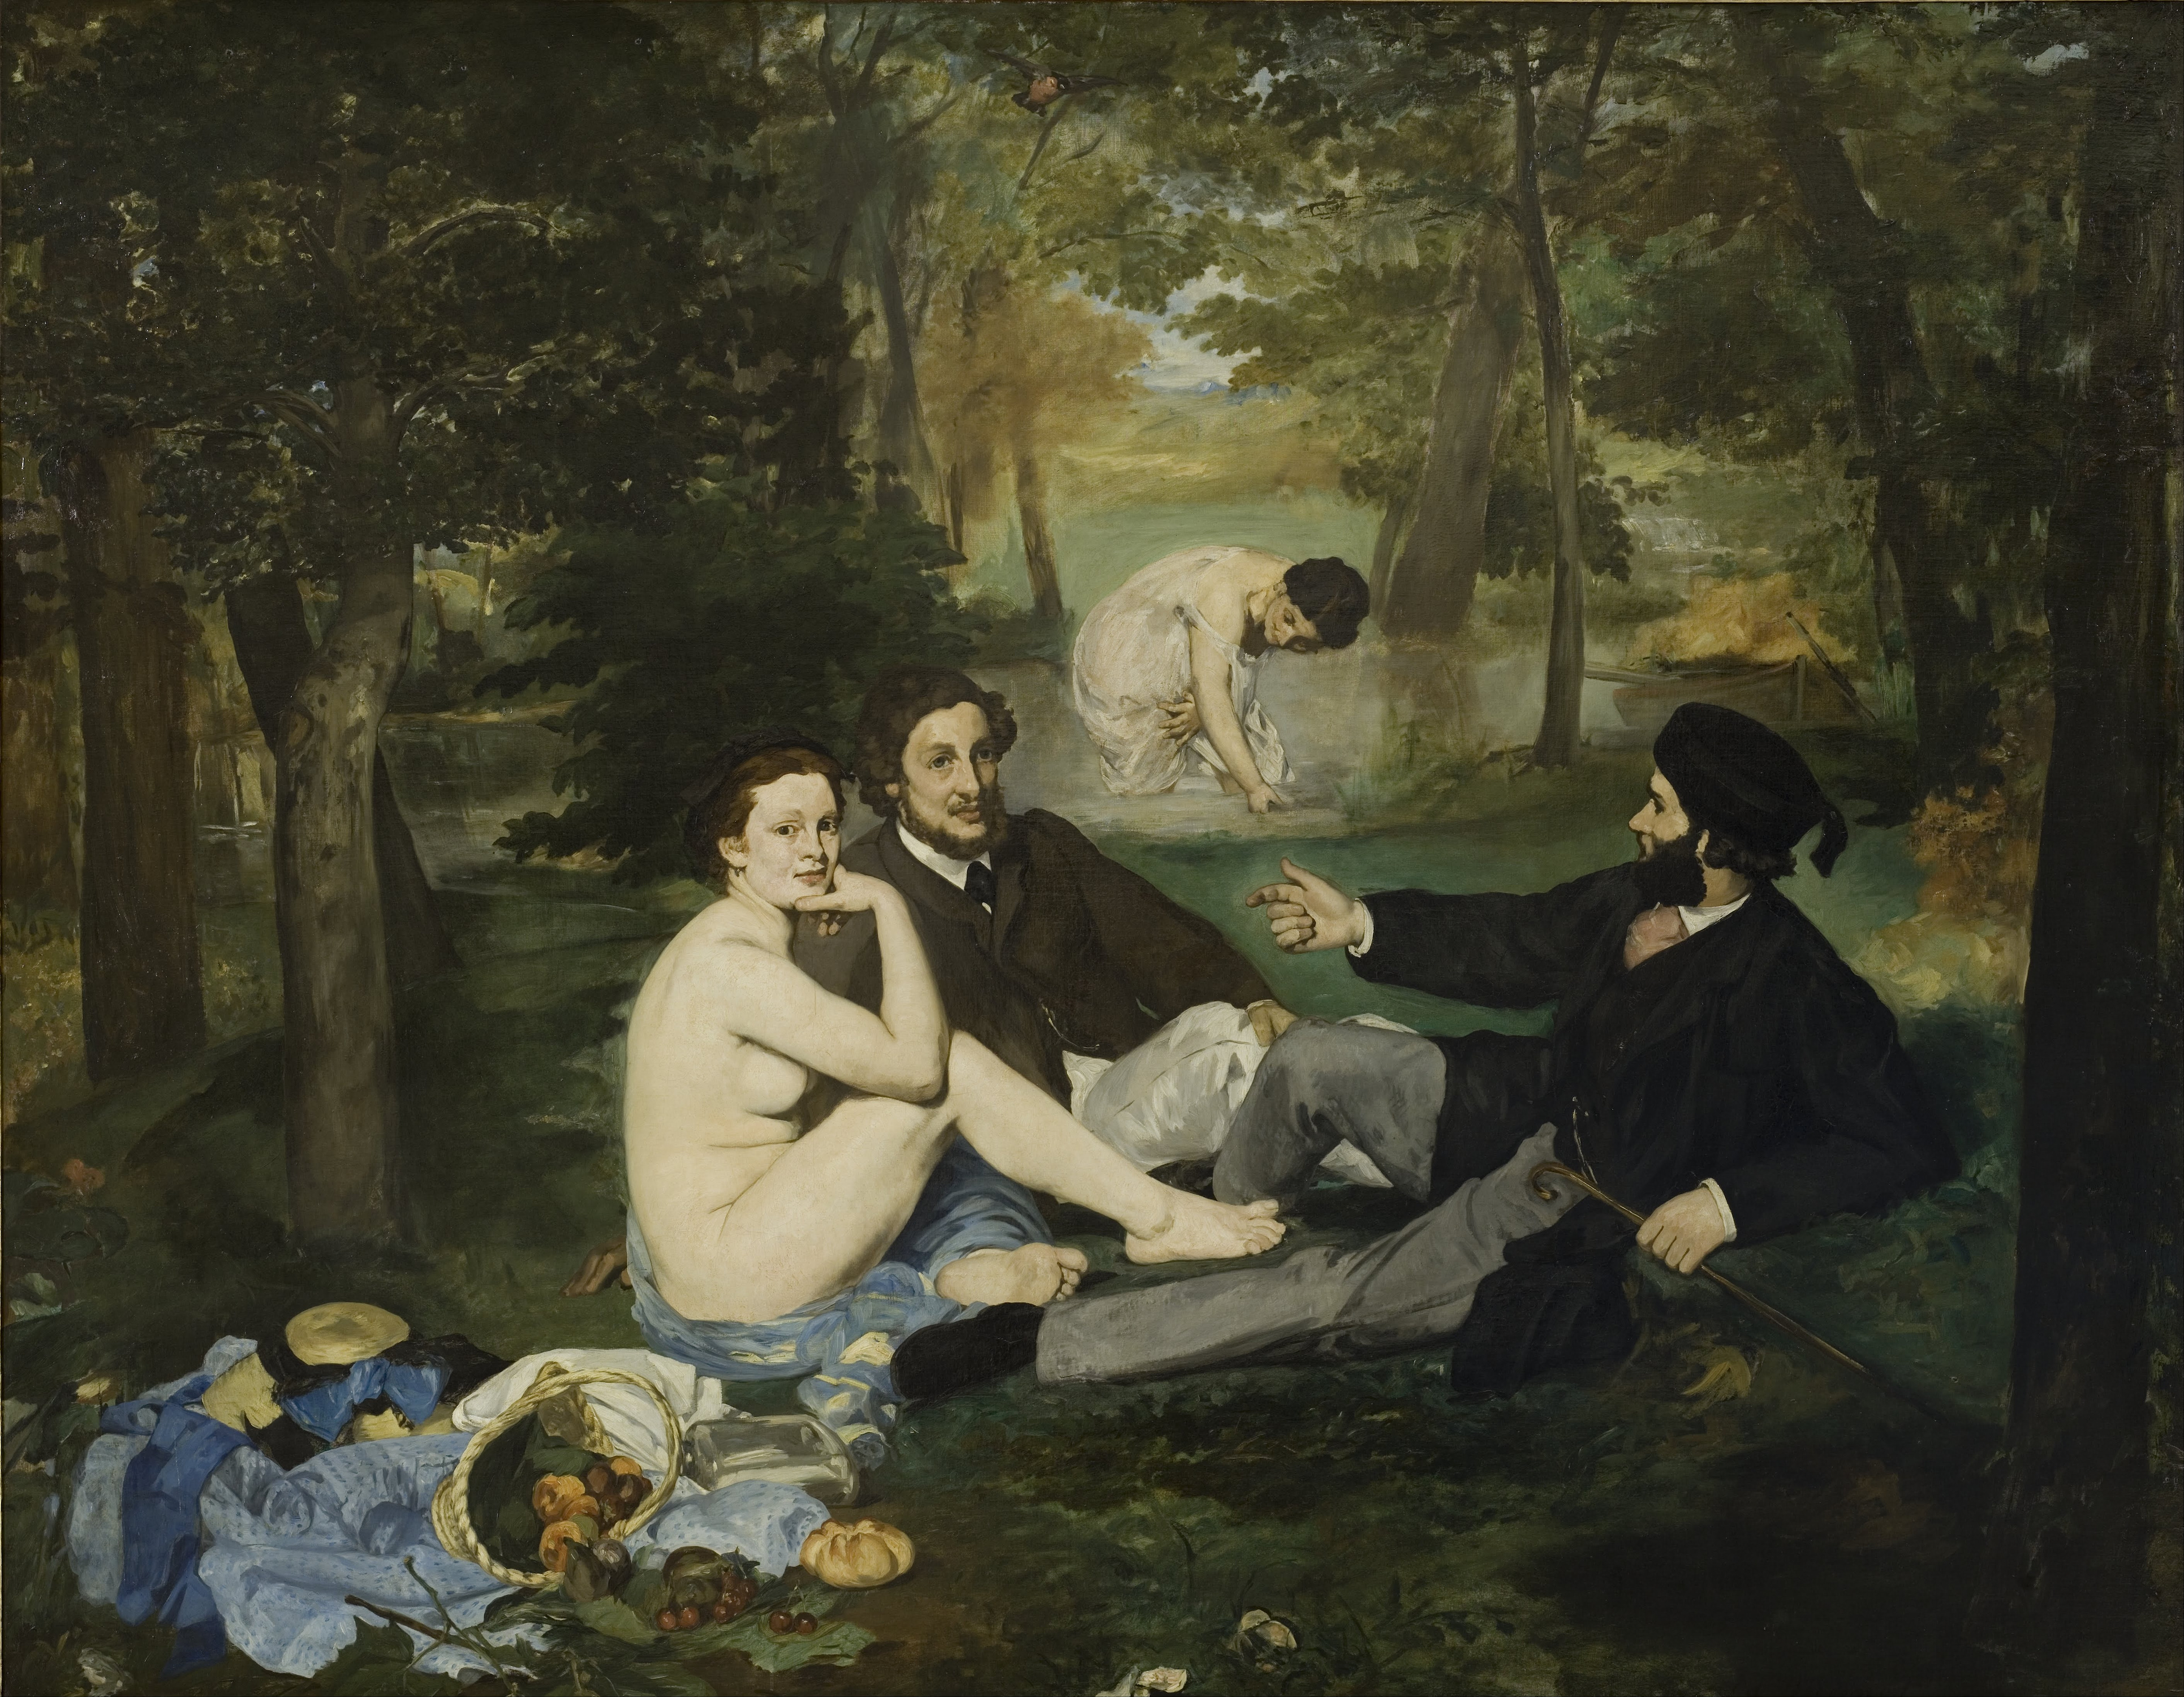 Almoço na relva by Édouard Manet - 1862-1863 - 208 × 265 cm Musée d'Orsay